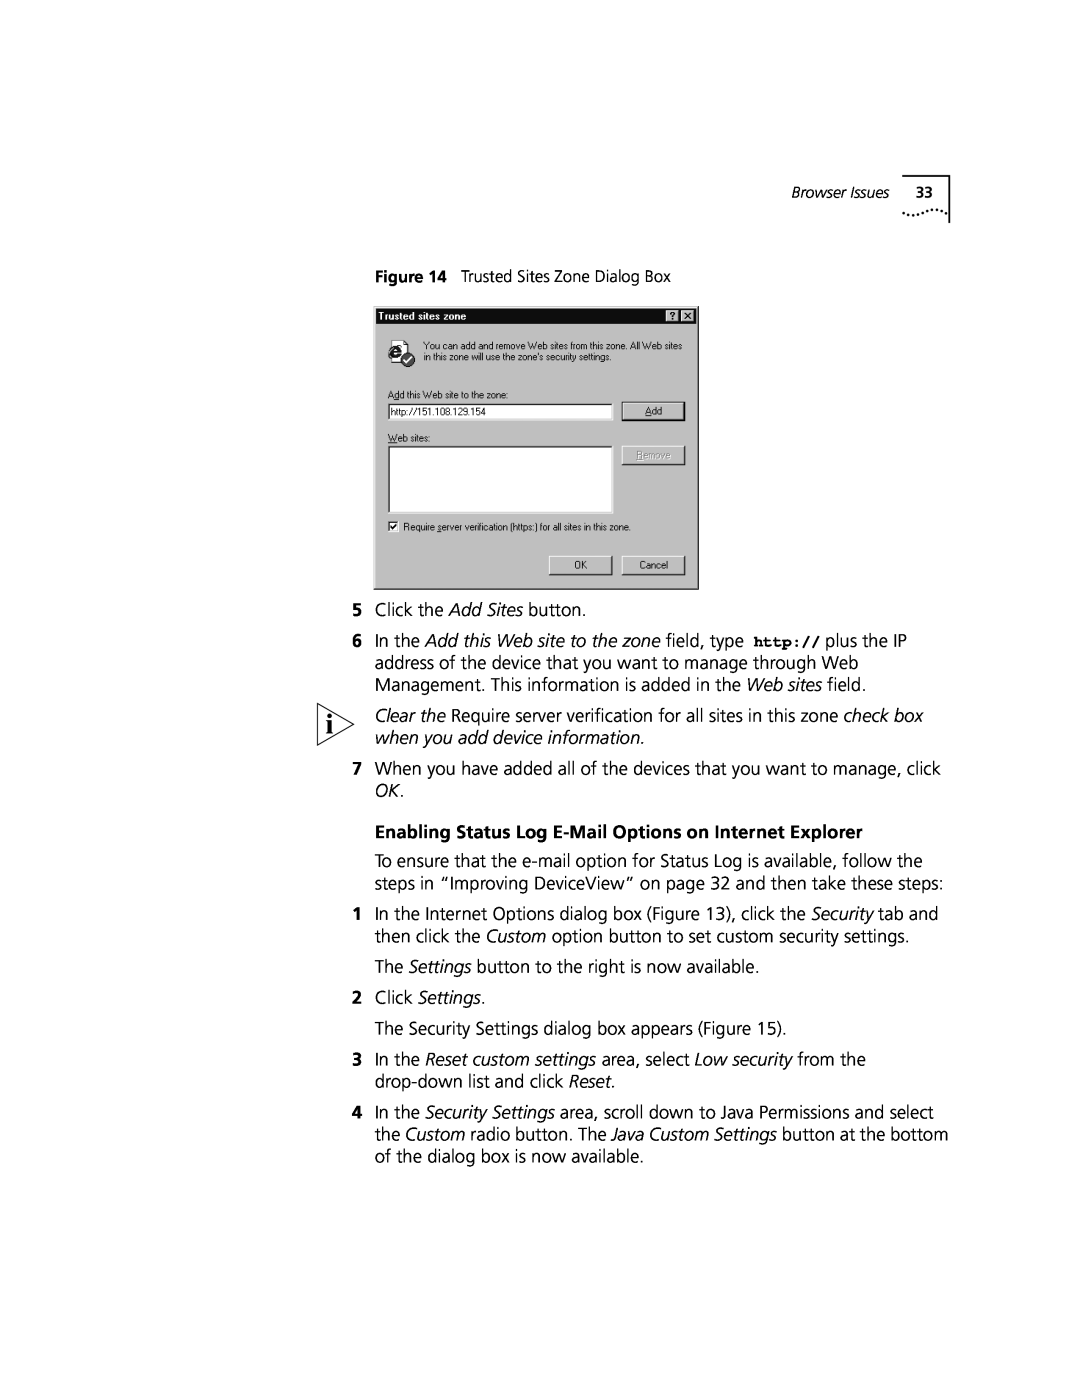 3Com 3900 manual Click Settings, Enabling Status Log E-Mail Options on Internet Explorer 